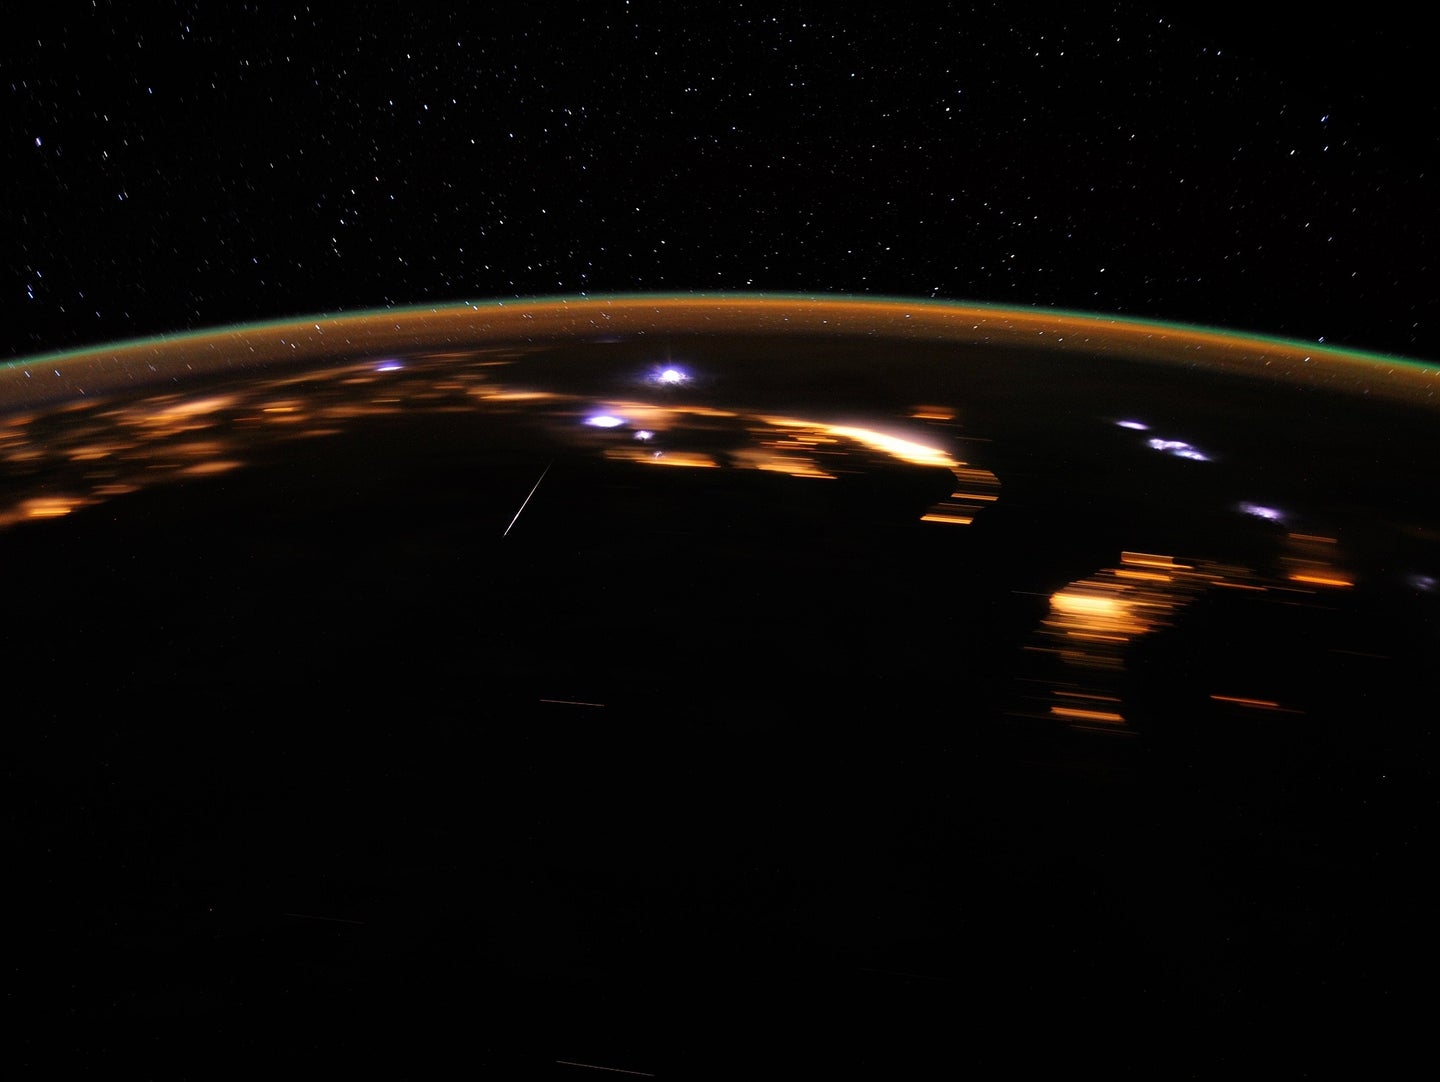 Lyrid meteor shower seen from Earth's orbit